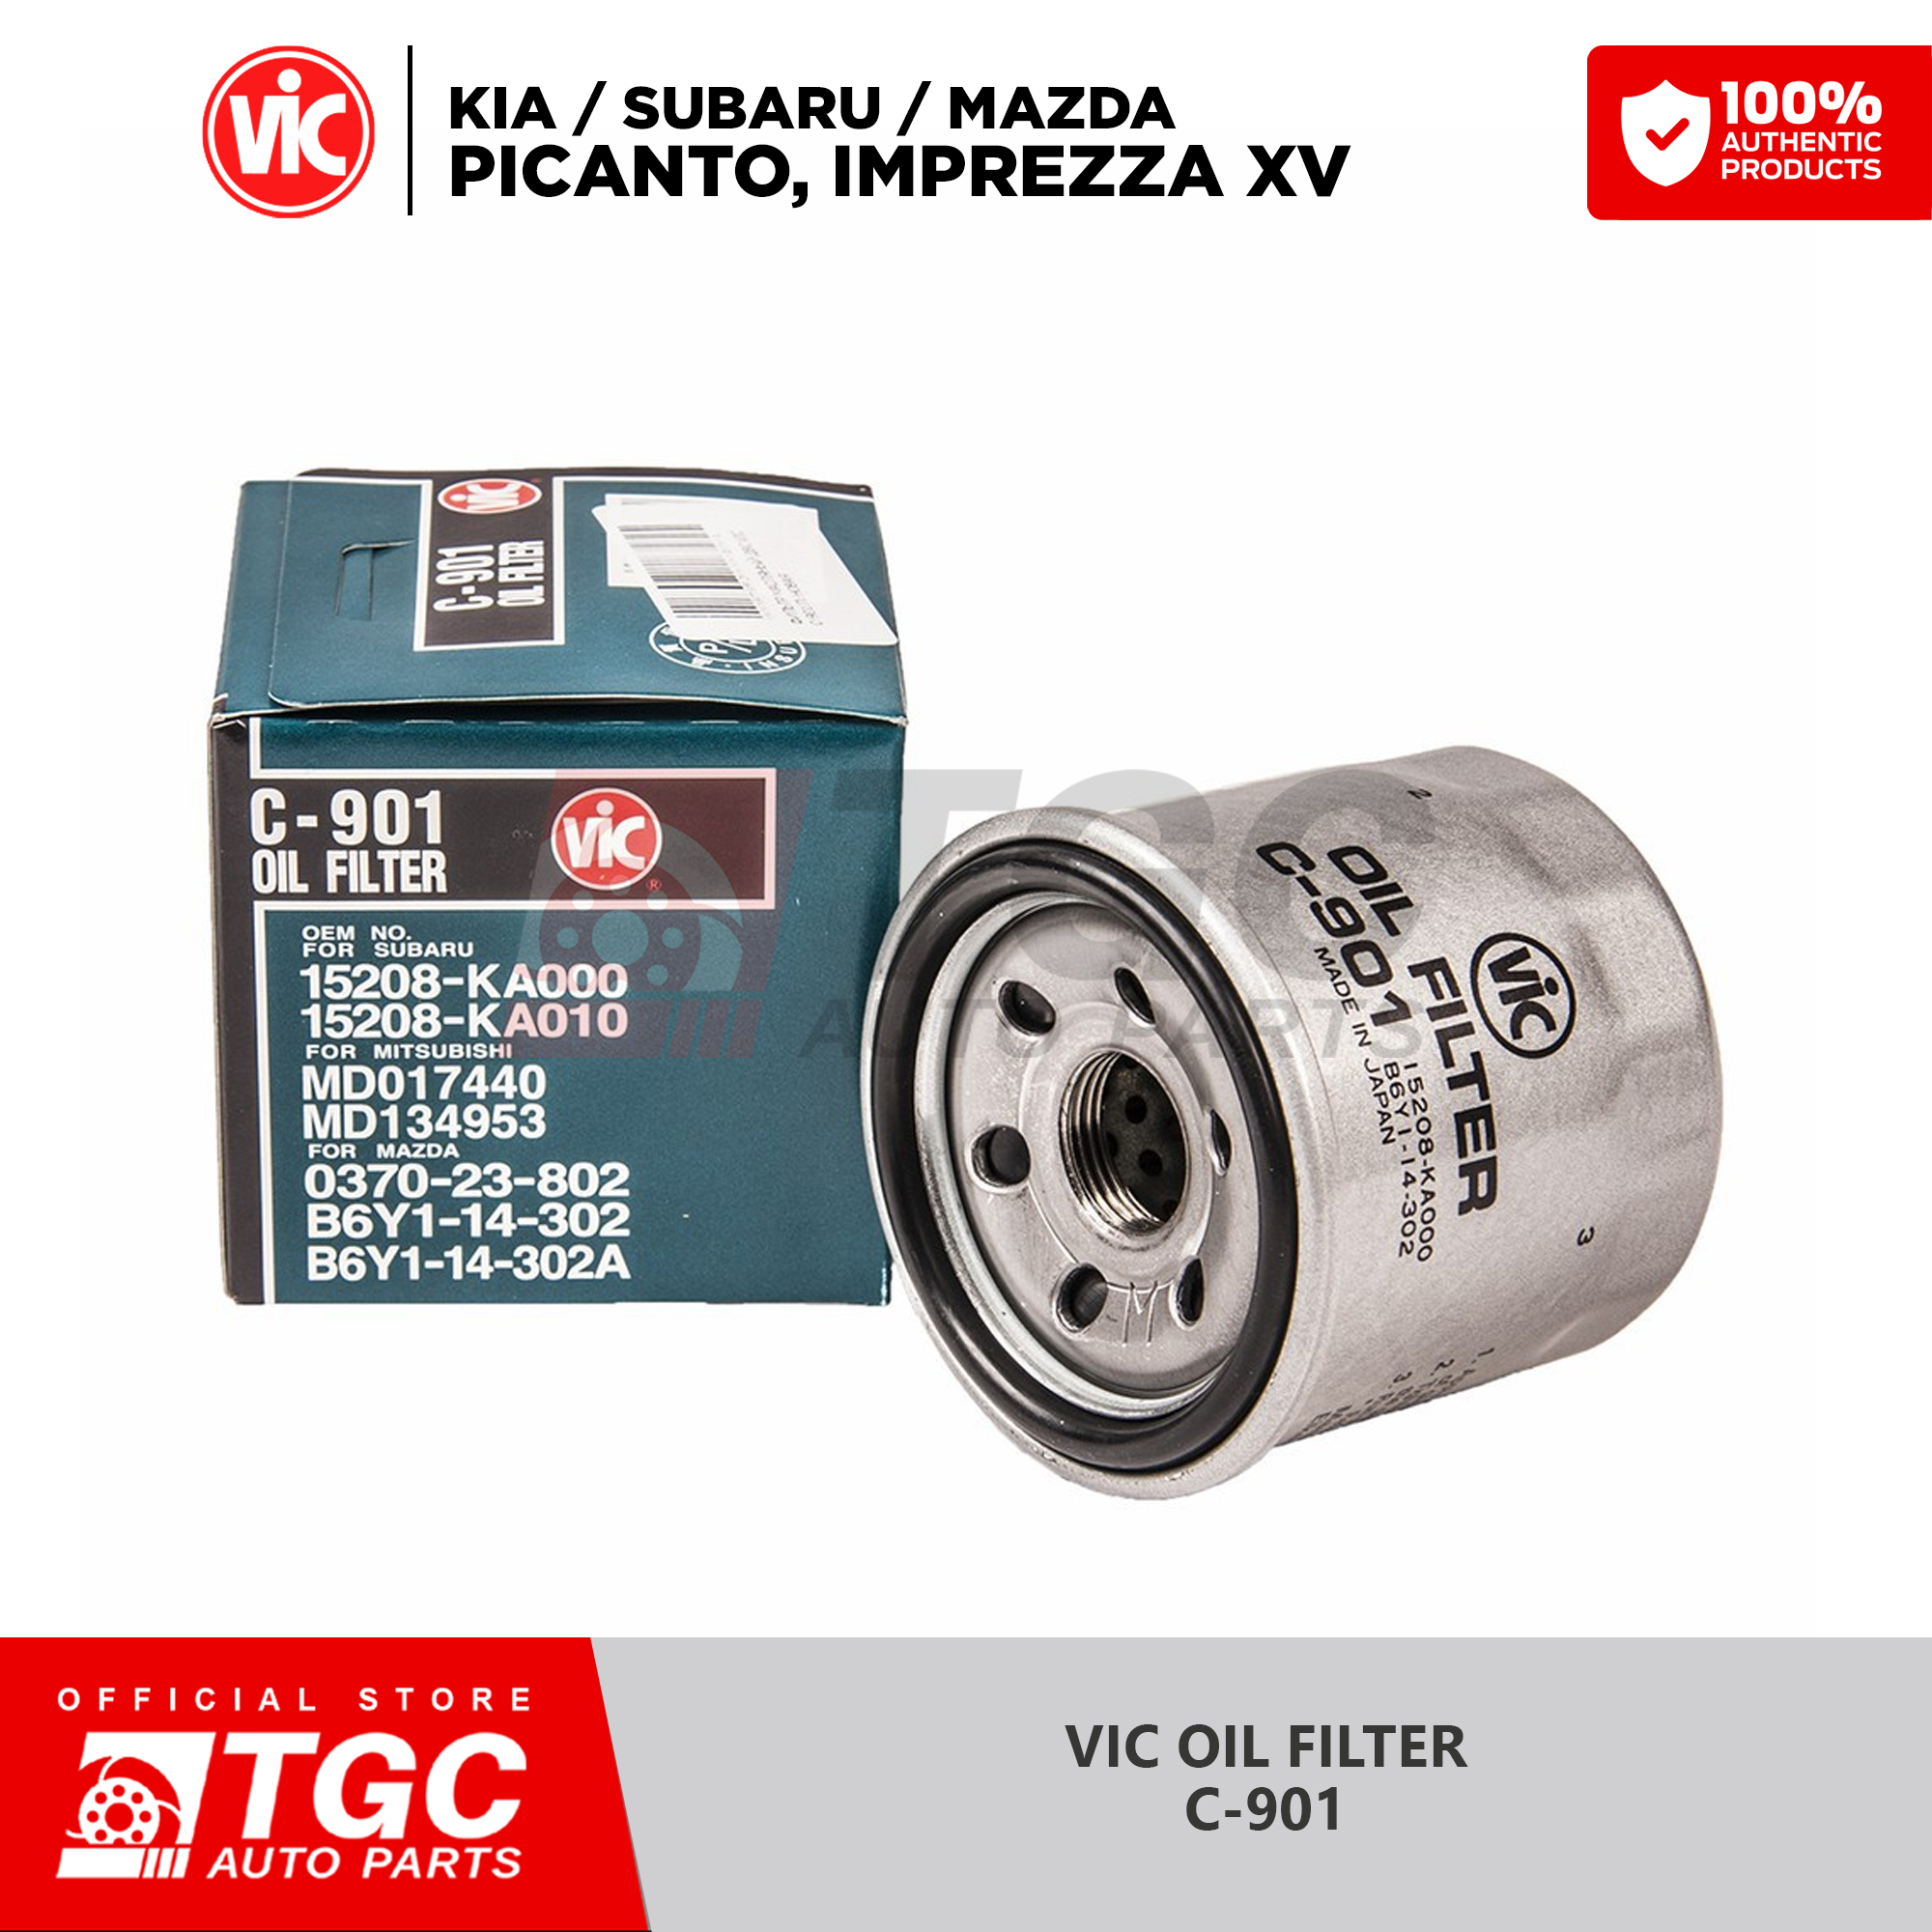 Vic Oil Filter C-901 for all Subaru models / Toyota 86 / Mazda 2 ...